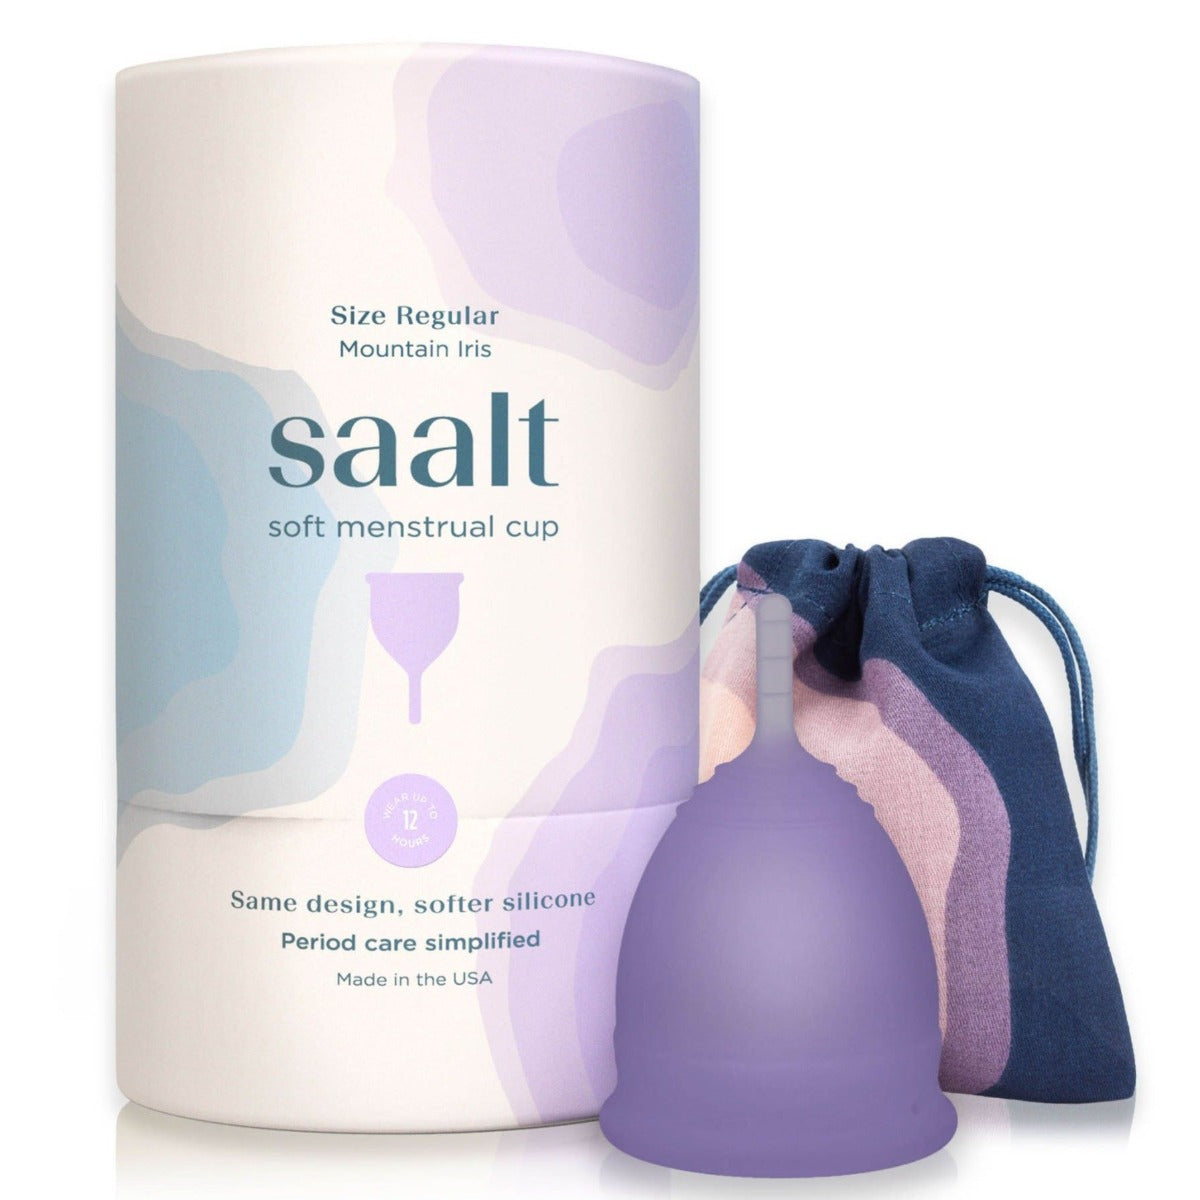 Saalt Soft Menstrual Cup | Mountain Iris Regular | The Period Co.